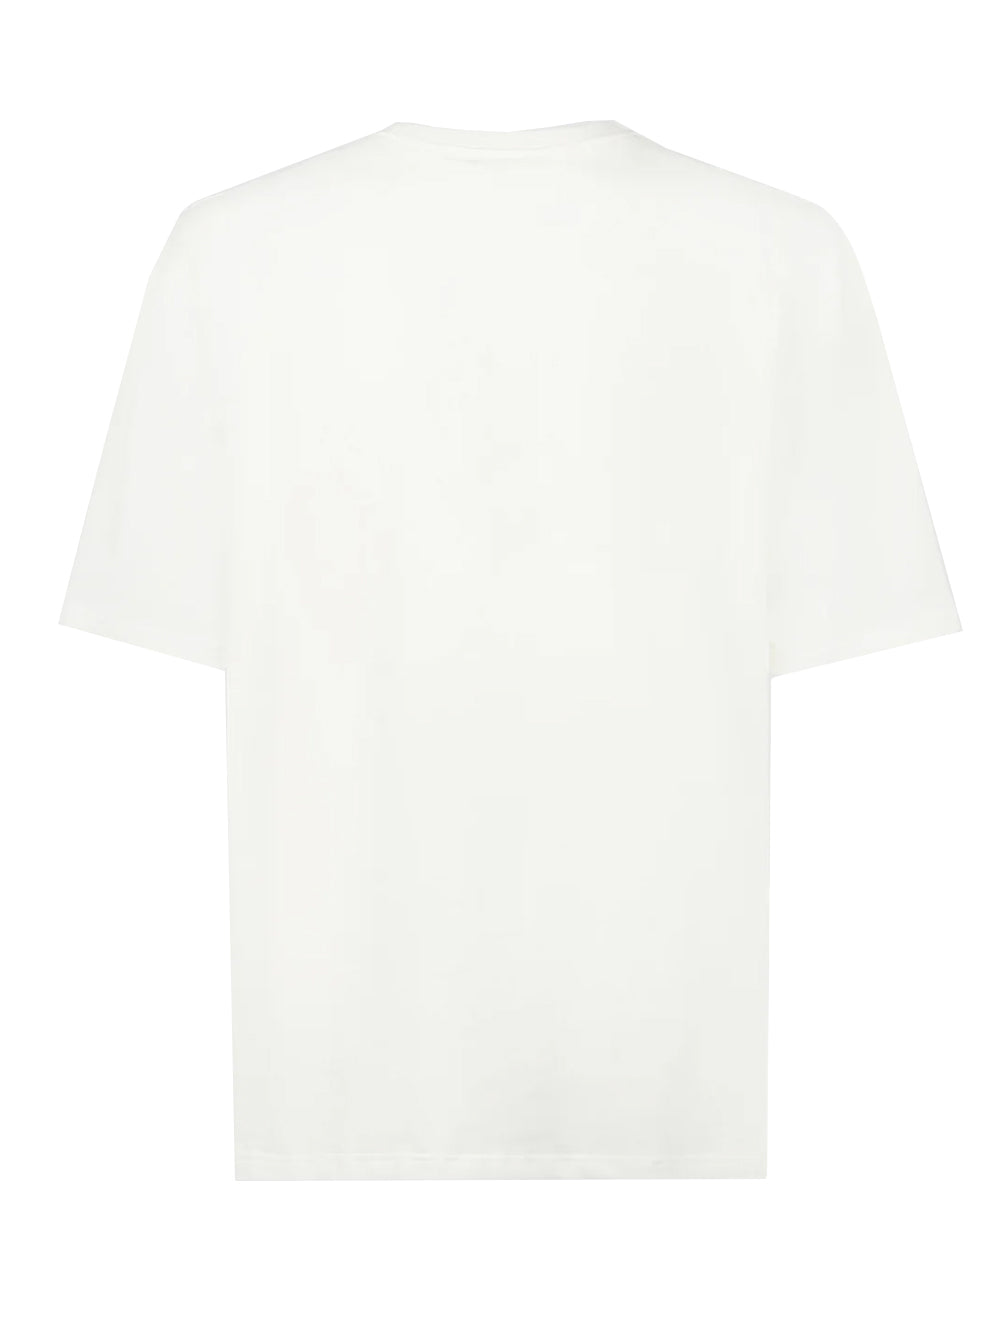 T-shirt PHOBIA Uomo PH00161 White